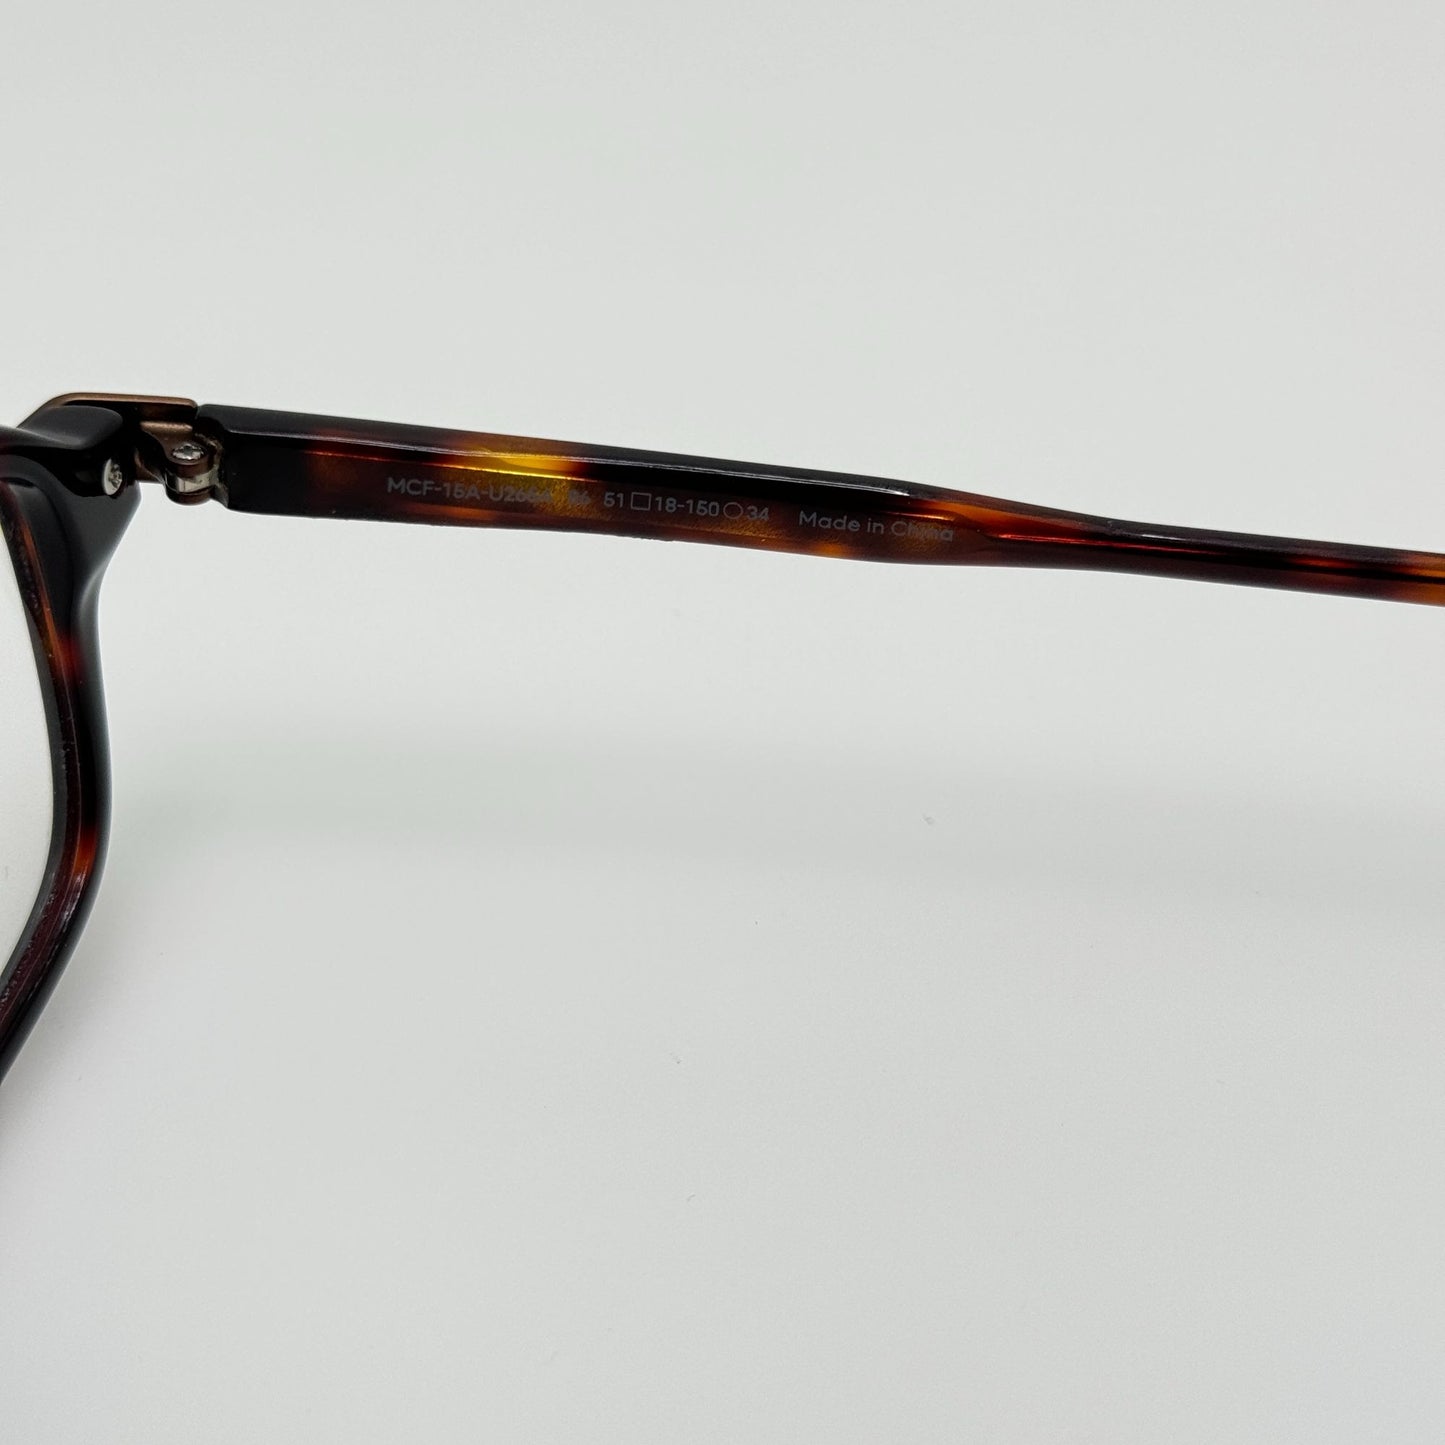 Jins Eyeglasses Eye Glasses Frames MCF-15A-U265A 86 51-18-150 34